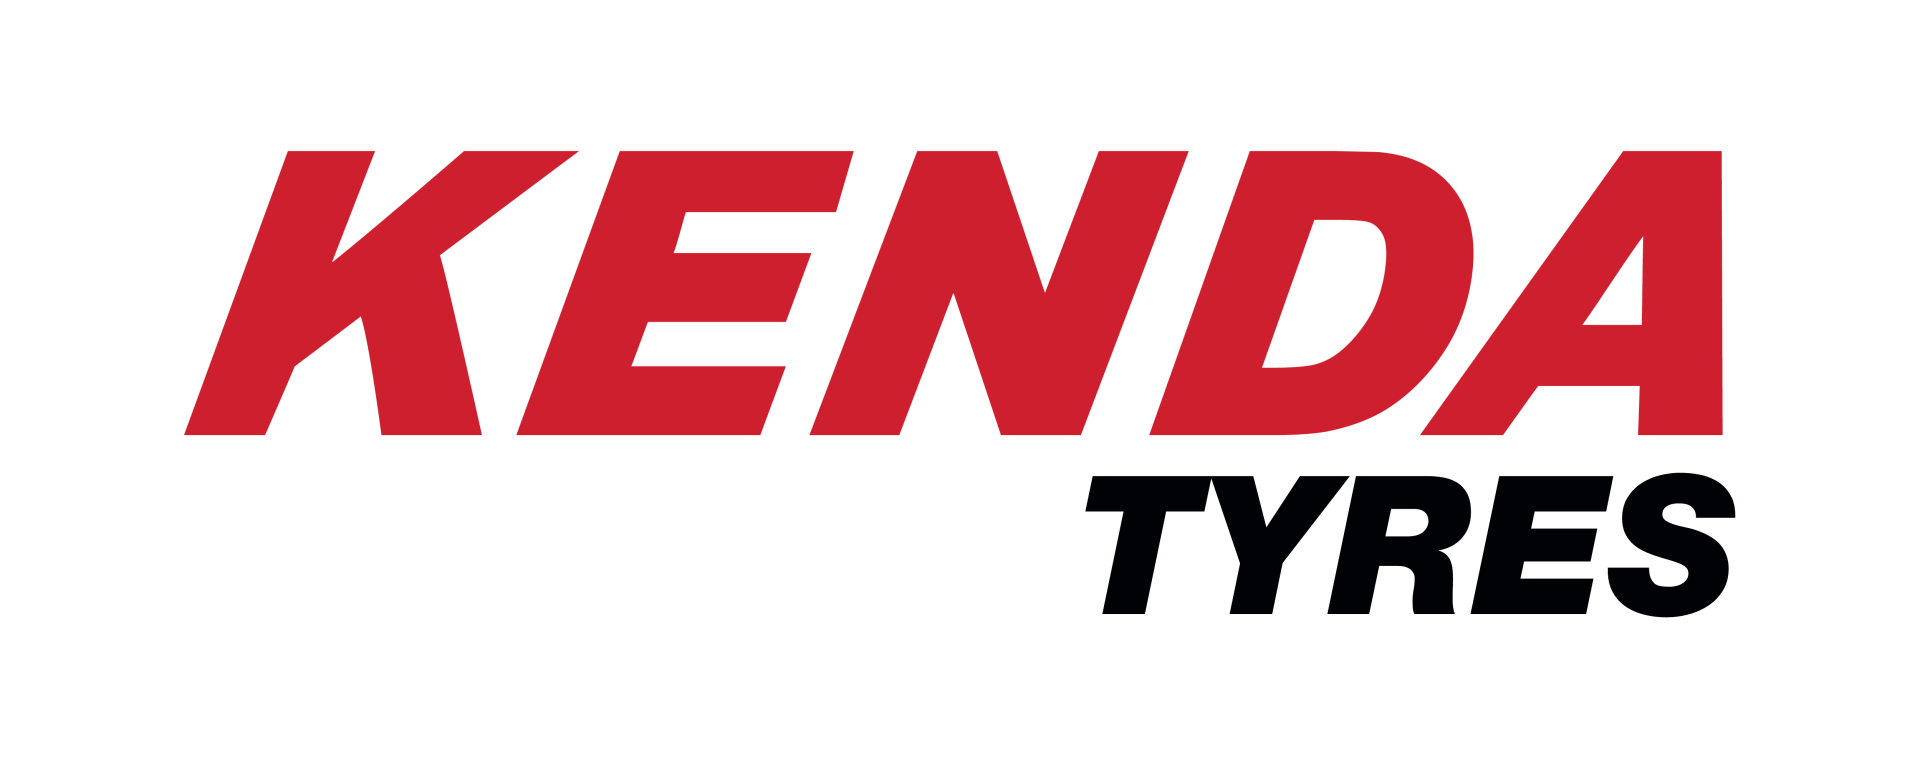 Kenda Tyres logo